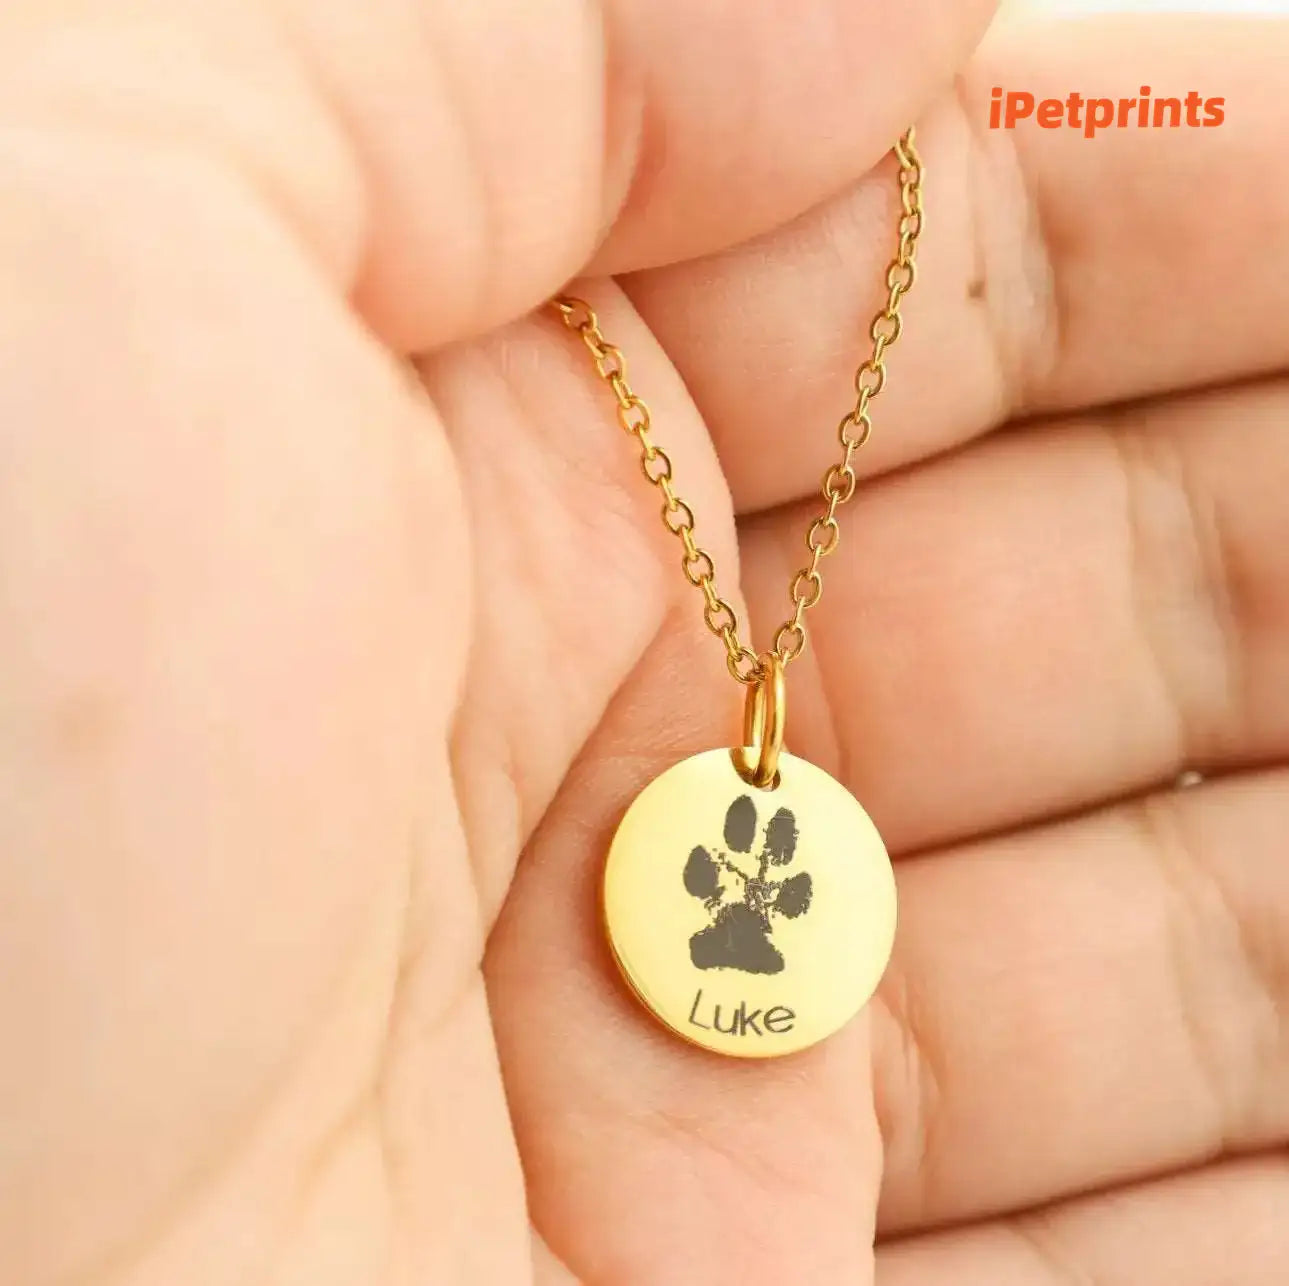 iPetprints Actual Paw Print Necklace